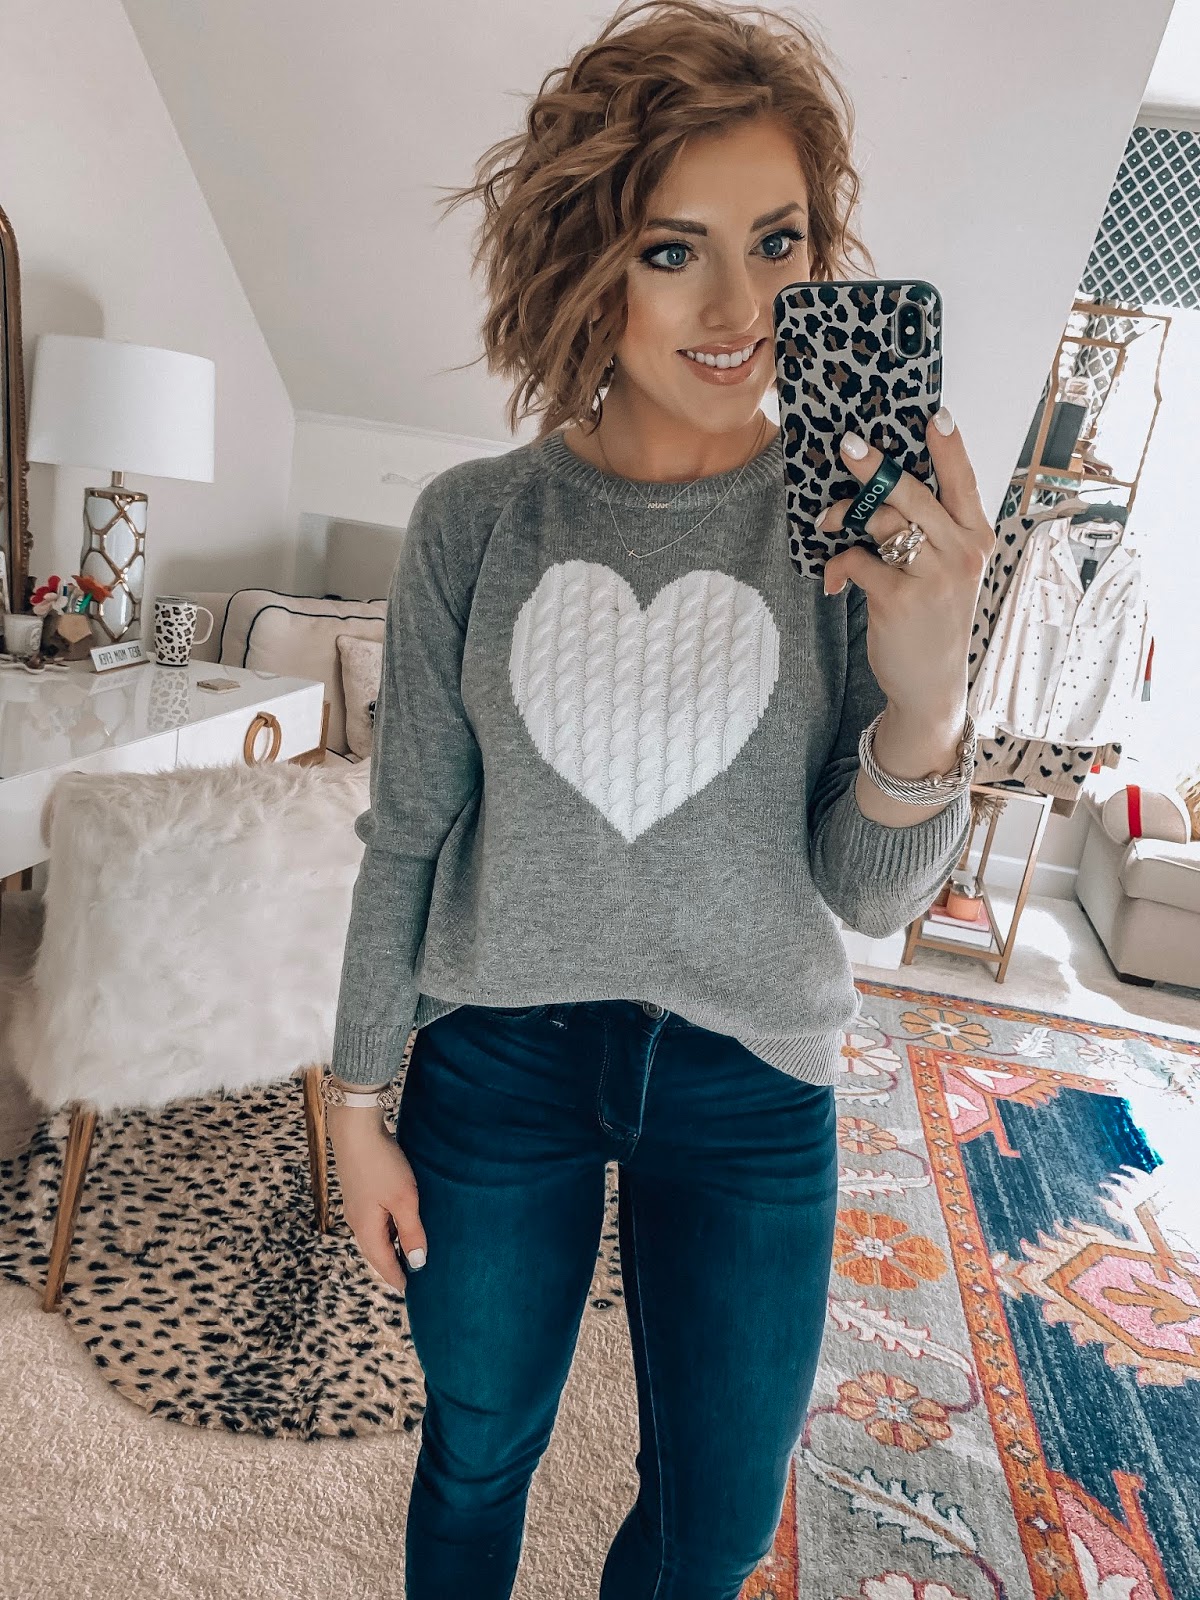 Recent Amazon Finds - Under $30 Heart Sweater for Valentine's Day - Something Delightful Blog #AmazonFashion #RecentFinds #Hearts #ValentinesDay #AffordableFashion